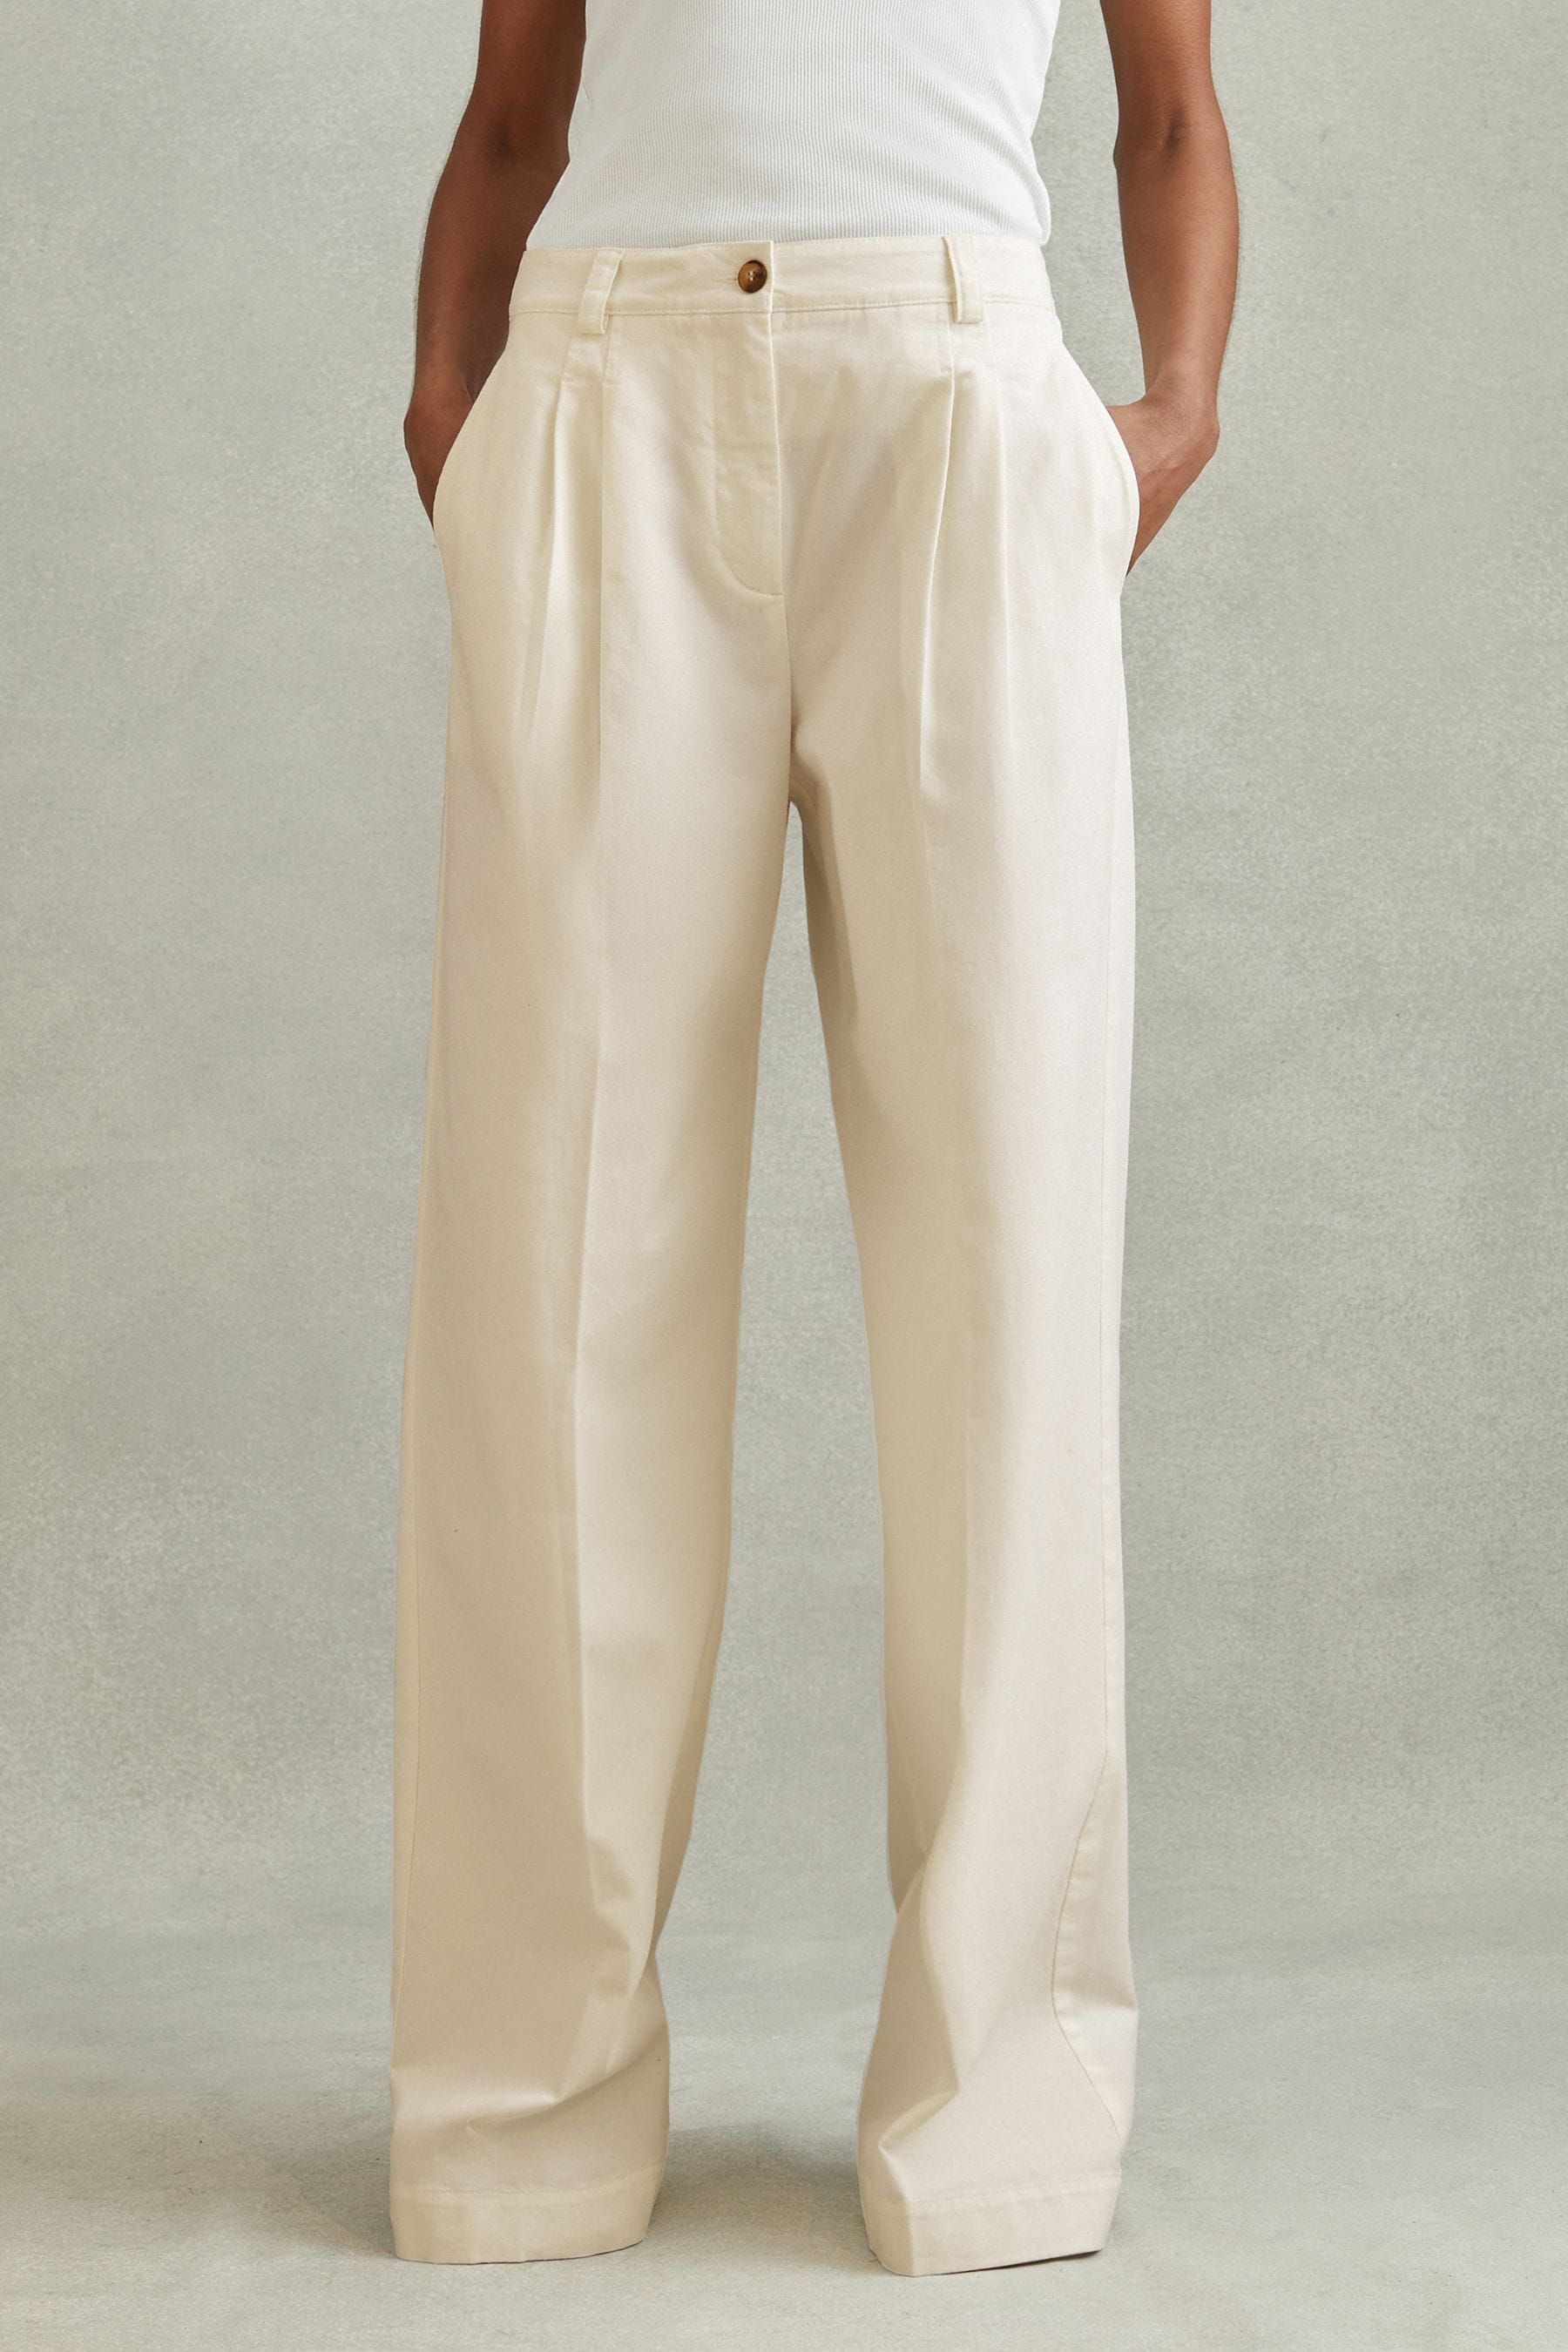 Reiss Astrid - White Petite Cotton Blend Wide Leg Trousers, Us 2